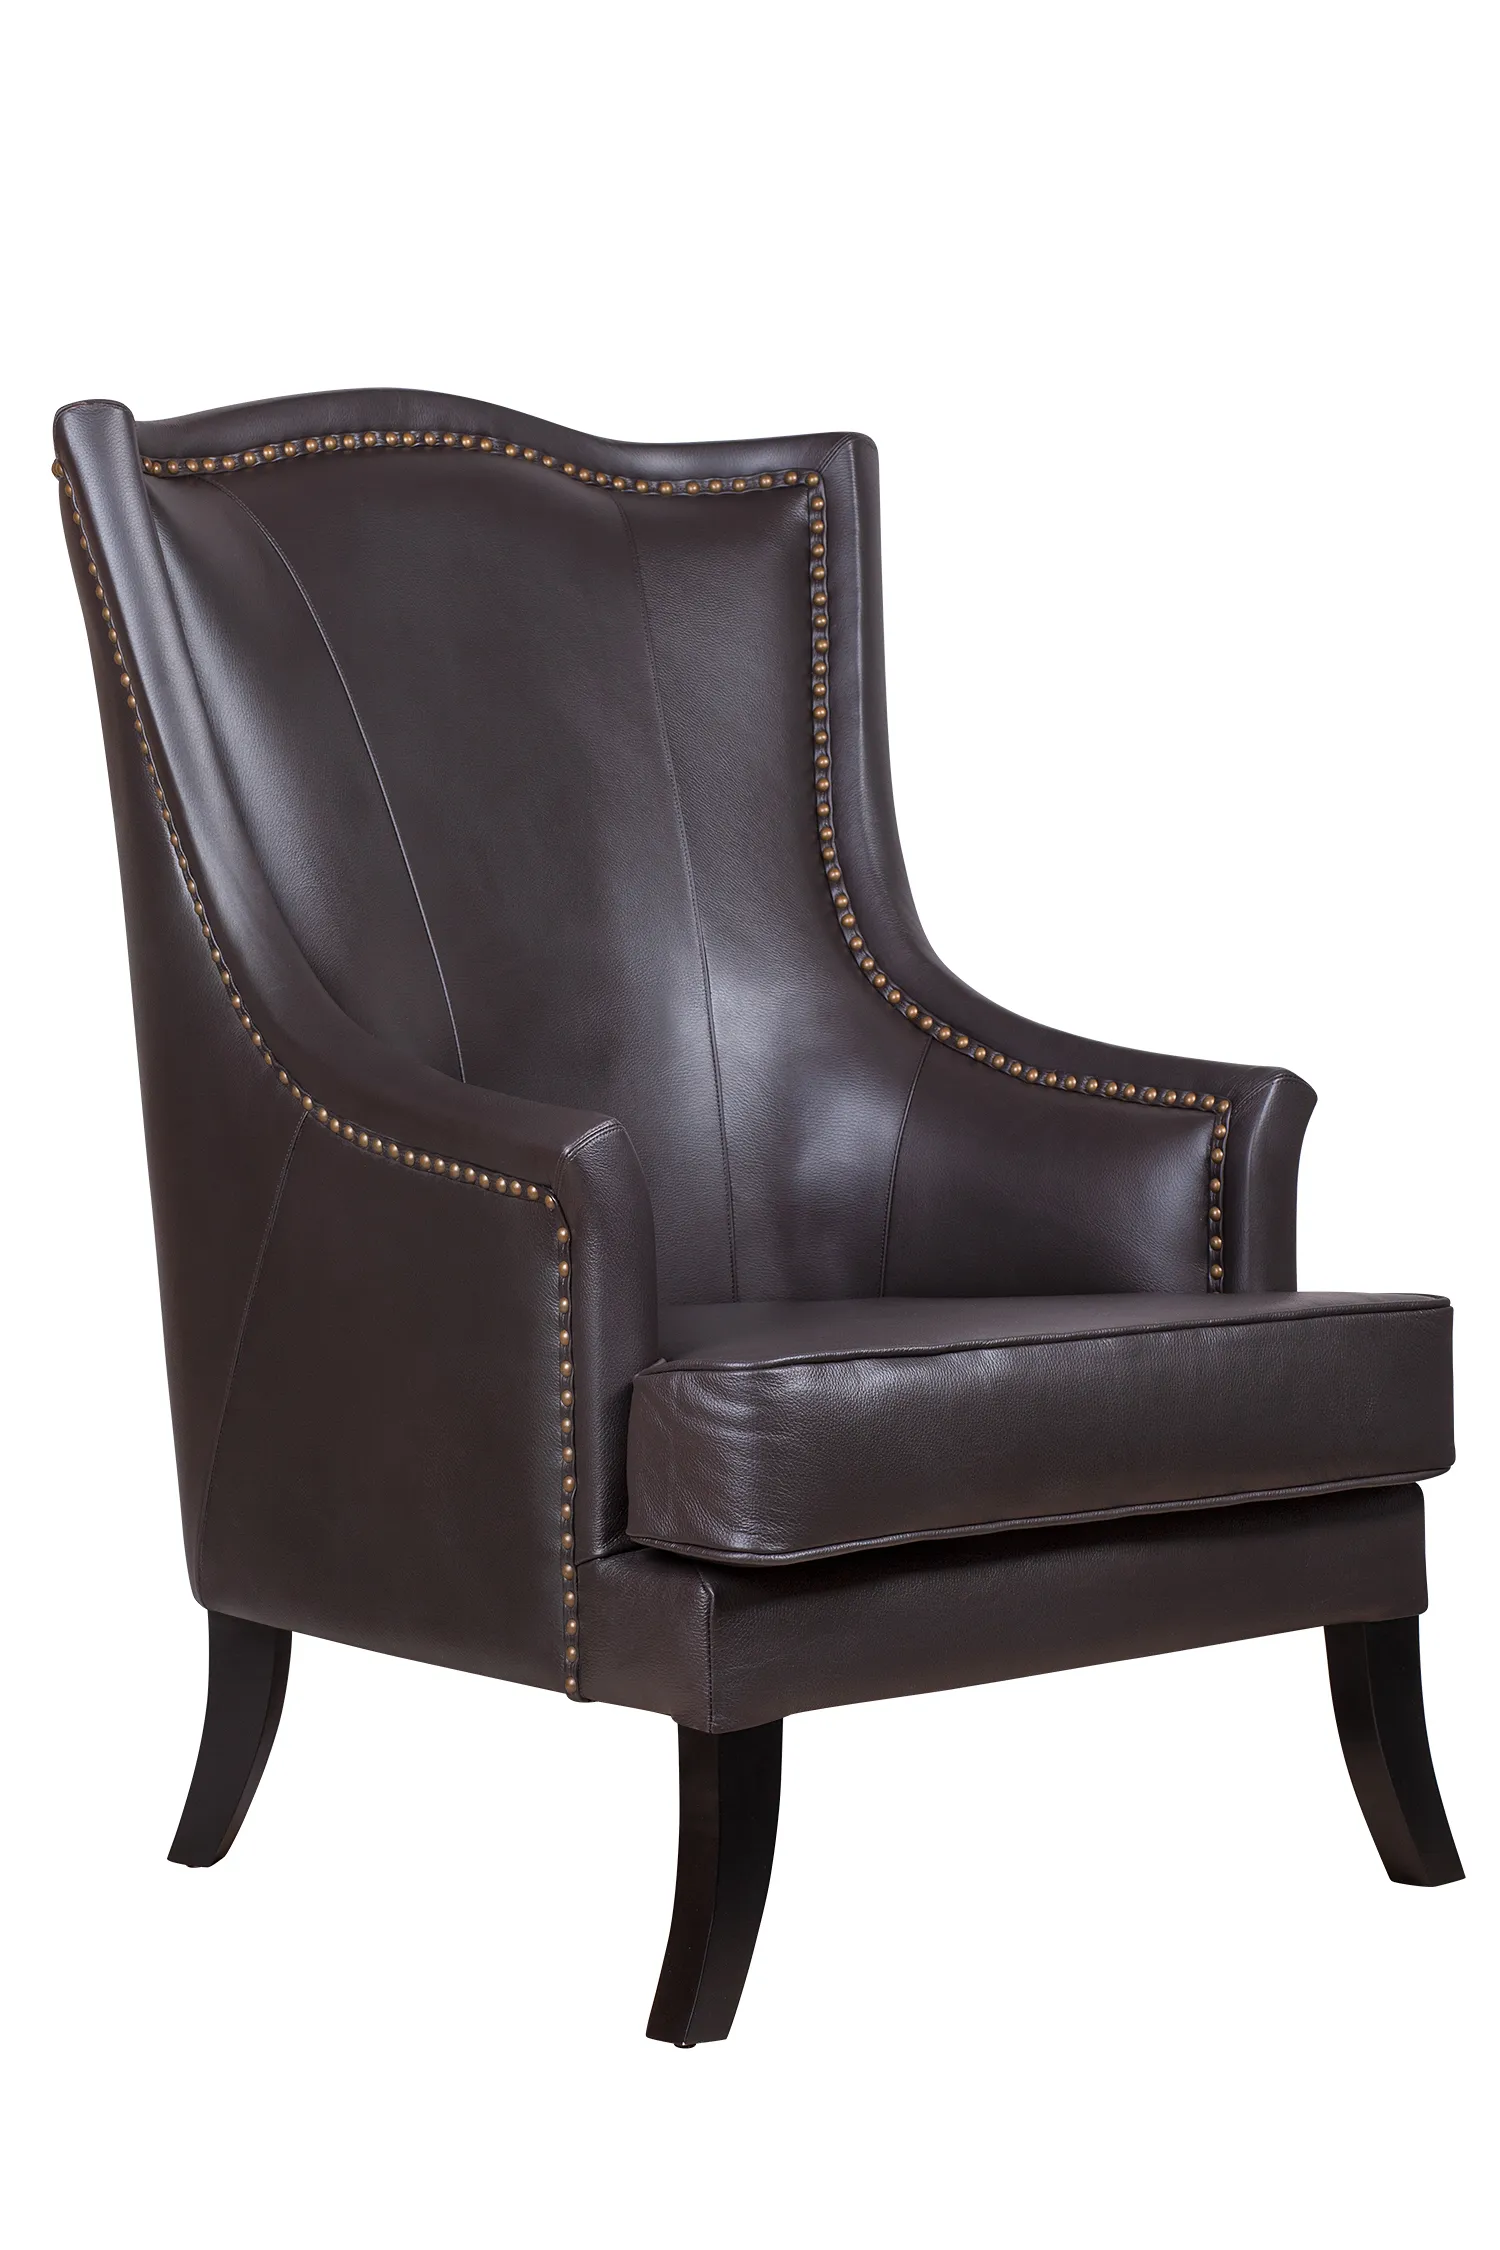 Кресло Chester leather натуральная кожа коричневый